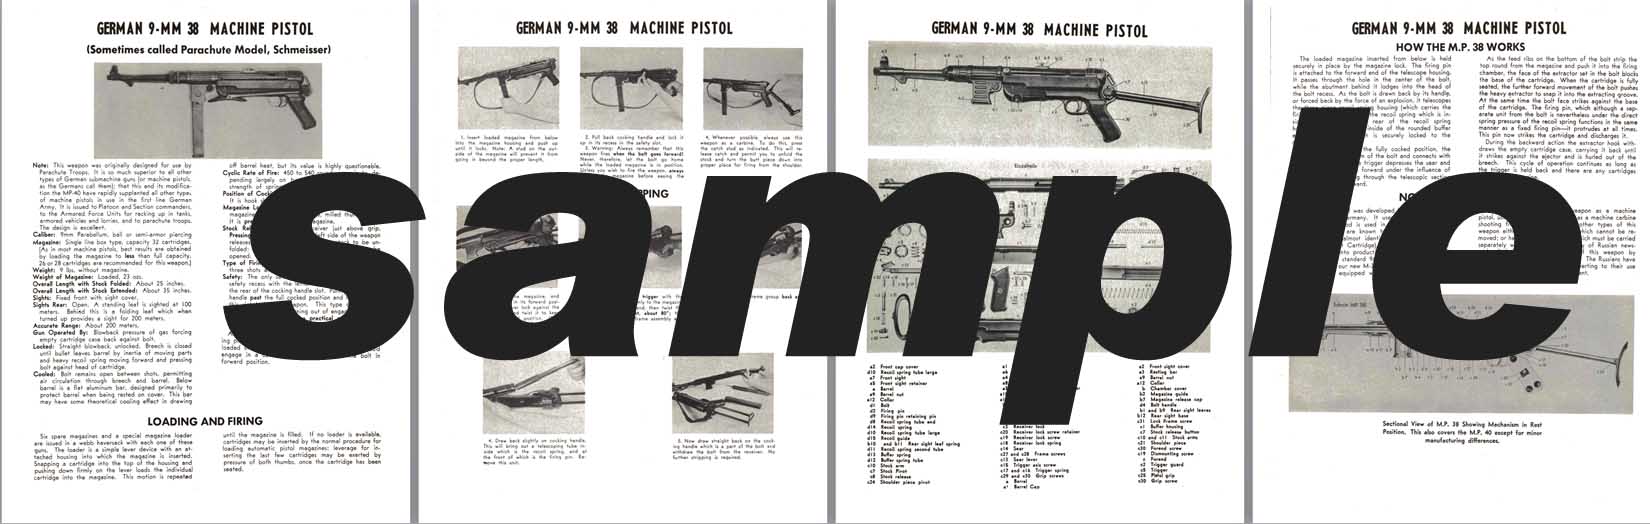 MP38 German 9mm 38 Machine Pistol Manual - GB-img-0